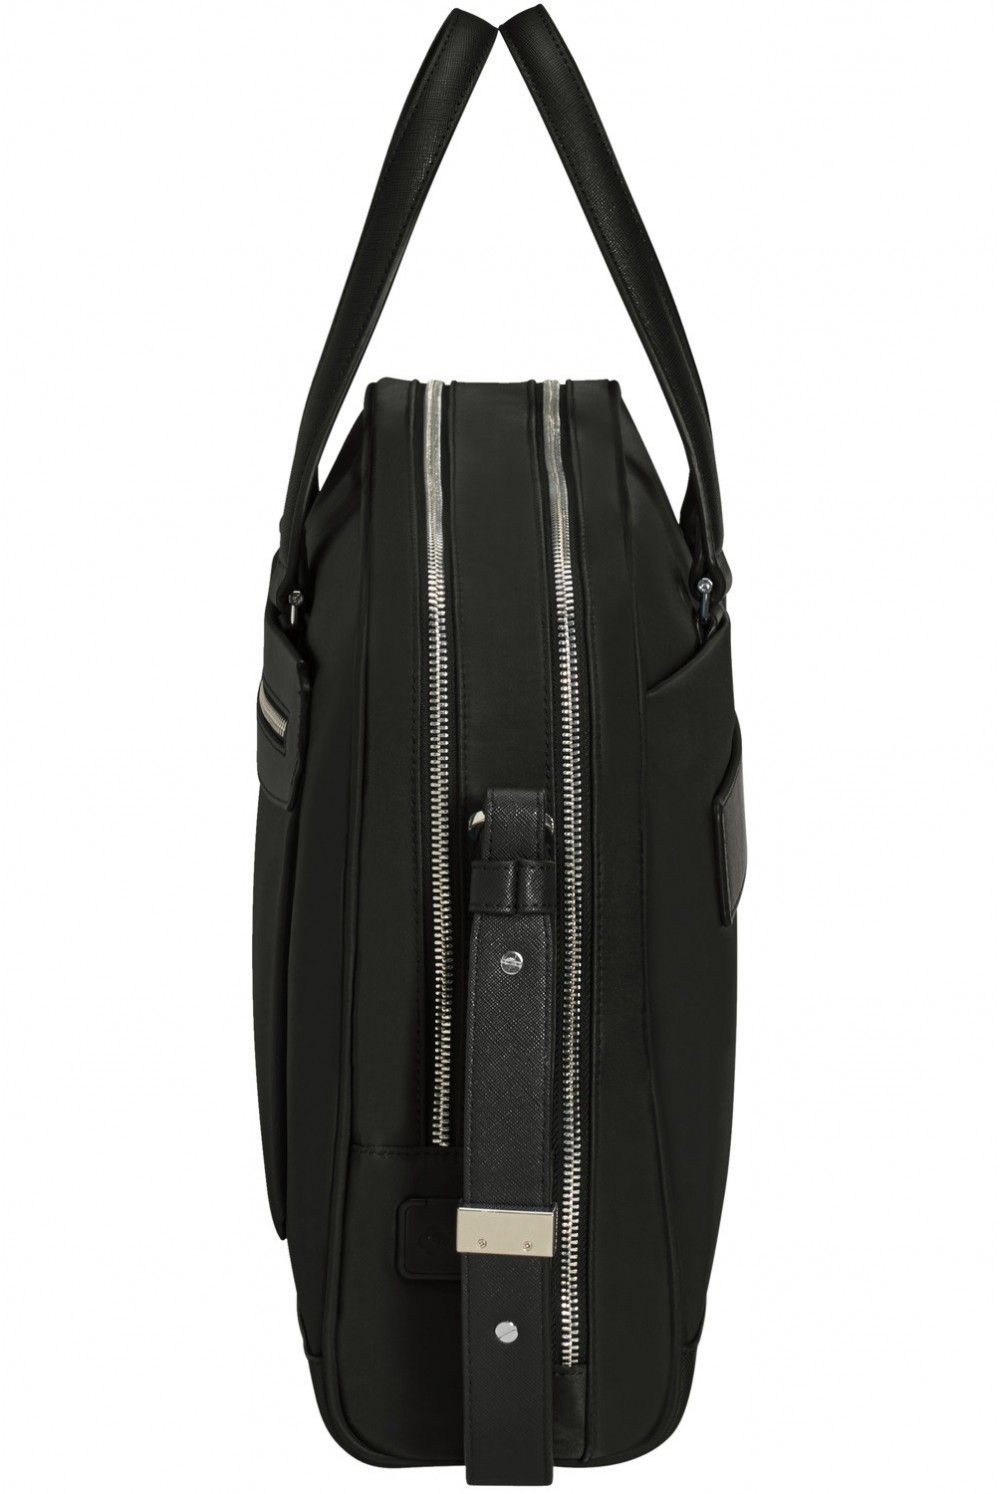 samsonite zalia 2 156 inch laptop handbag